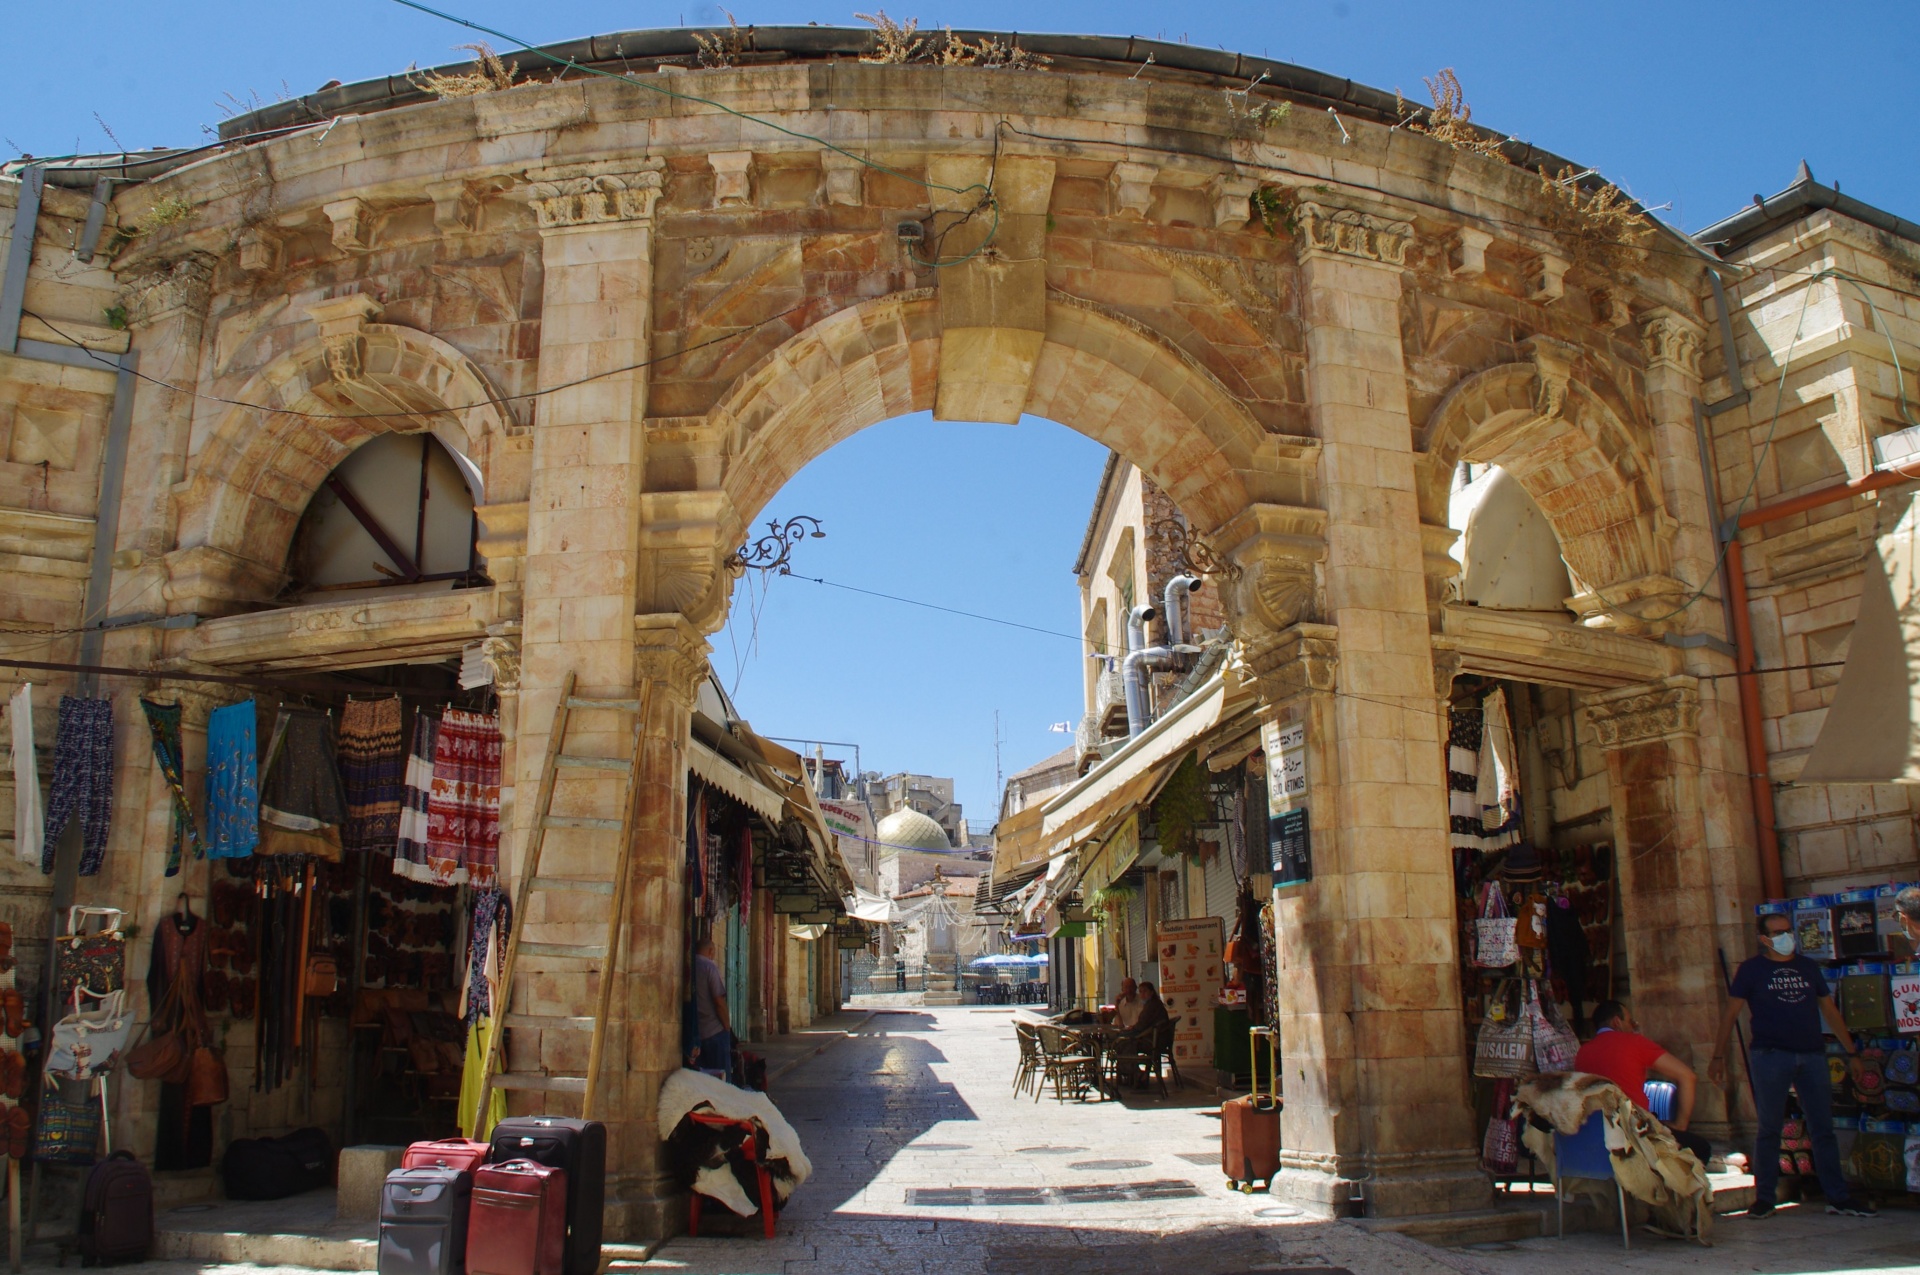 Market In Old City Of Jerusalem